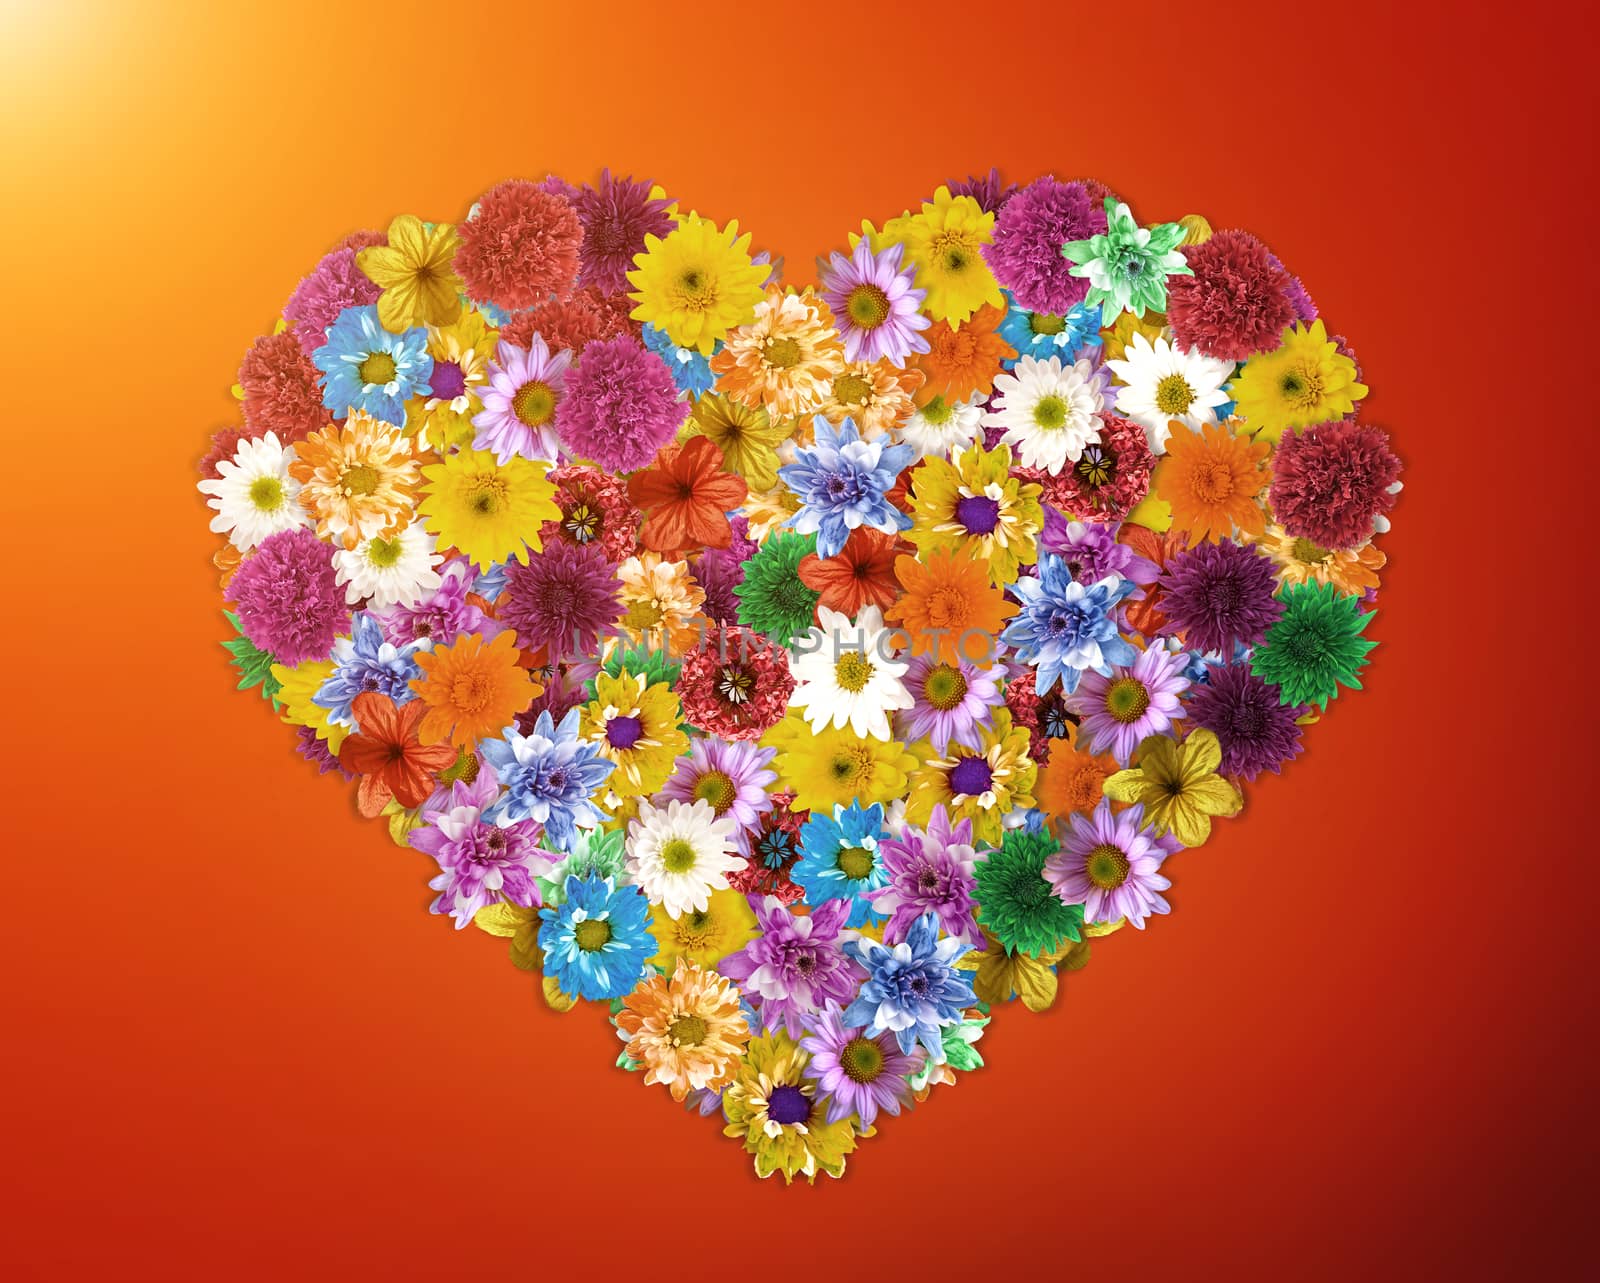 Flower arrangement is Heart-shaped by pkproject